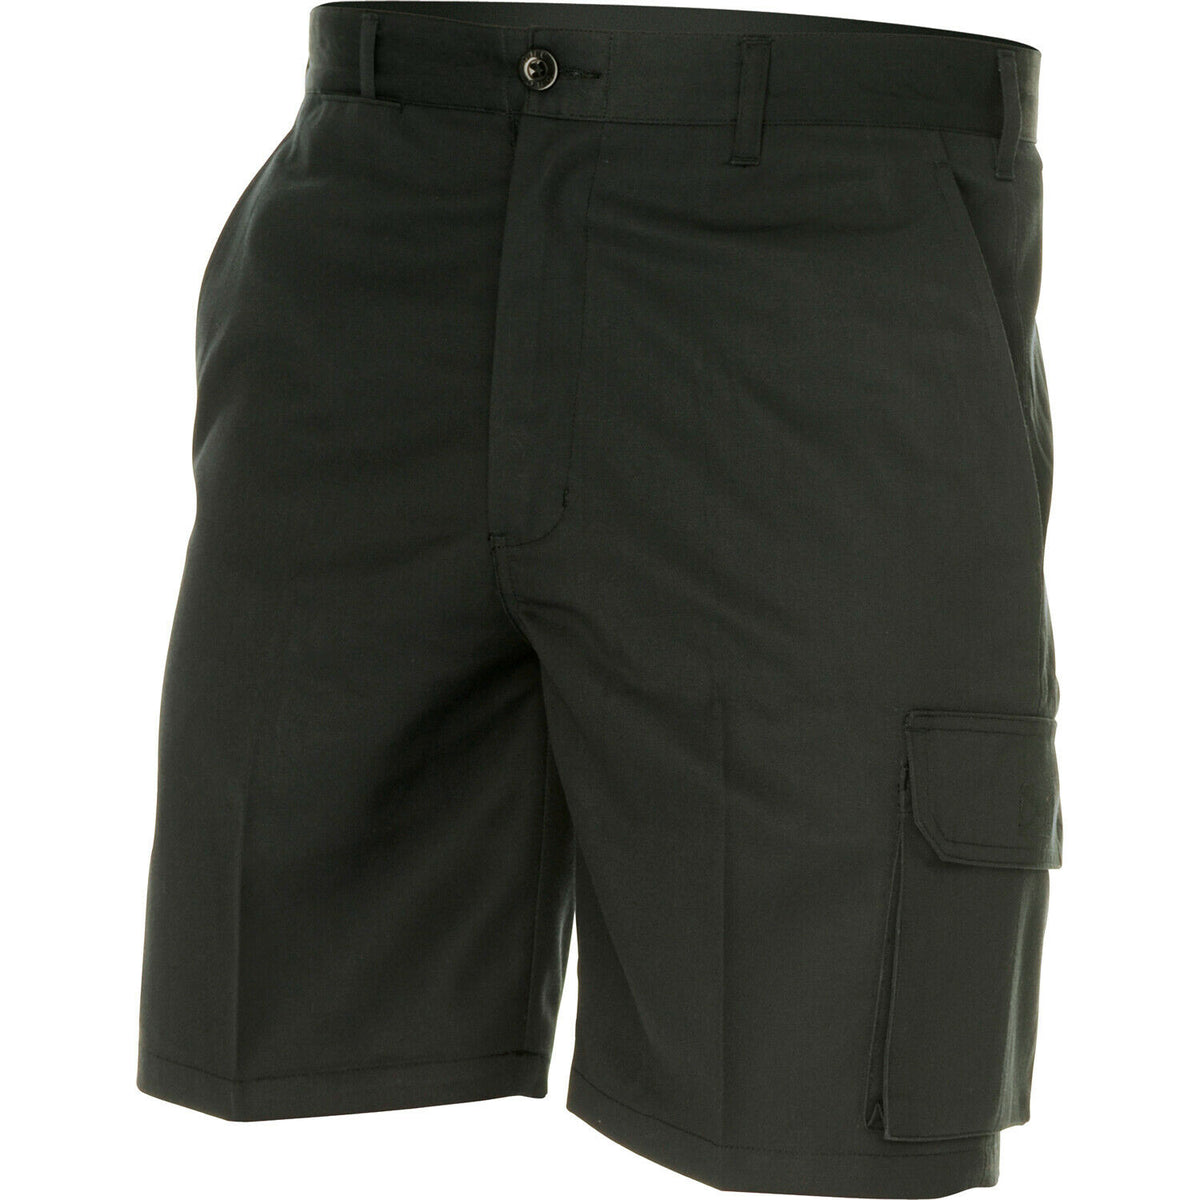 DNC Workwear Men Permanent Press Cargo shorts Tough Summer Short Work 4503